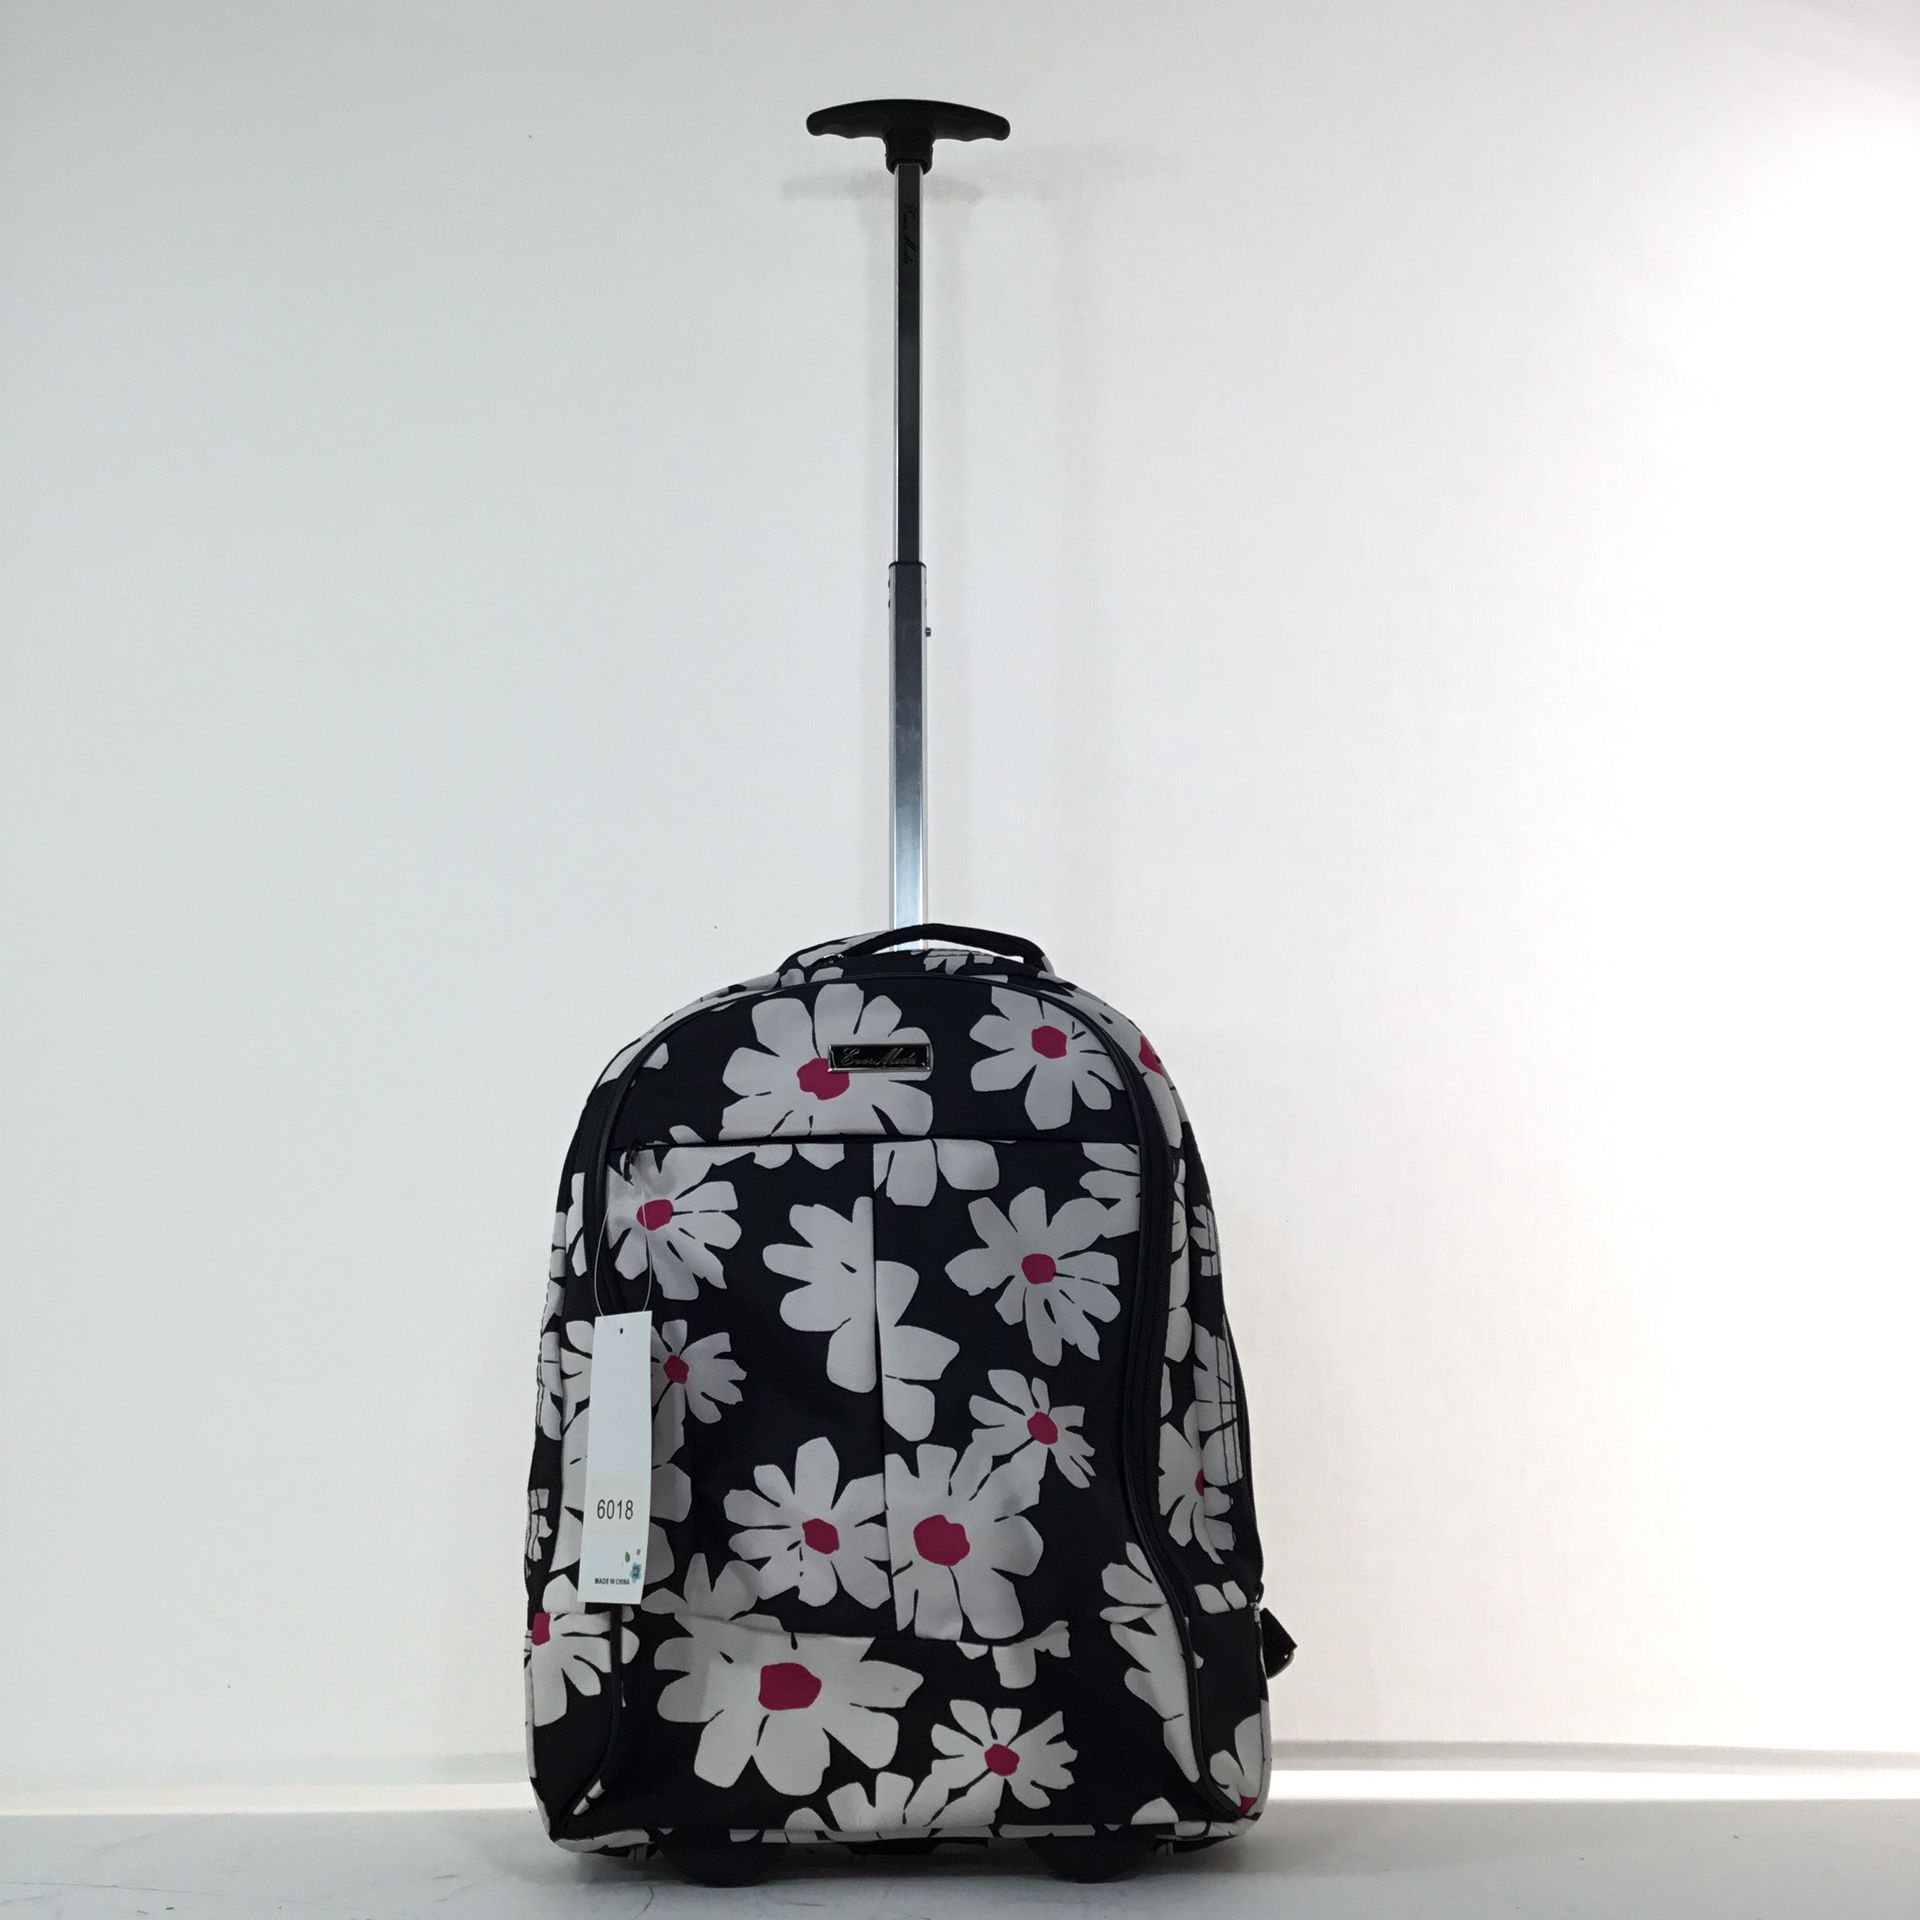 Flower backpack & laptop bag with wheels SALE